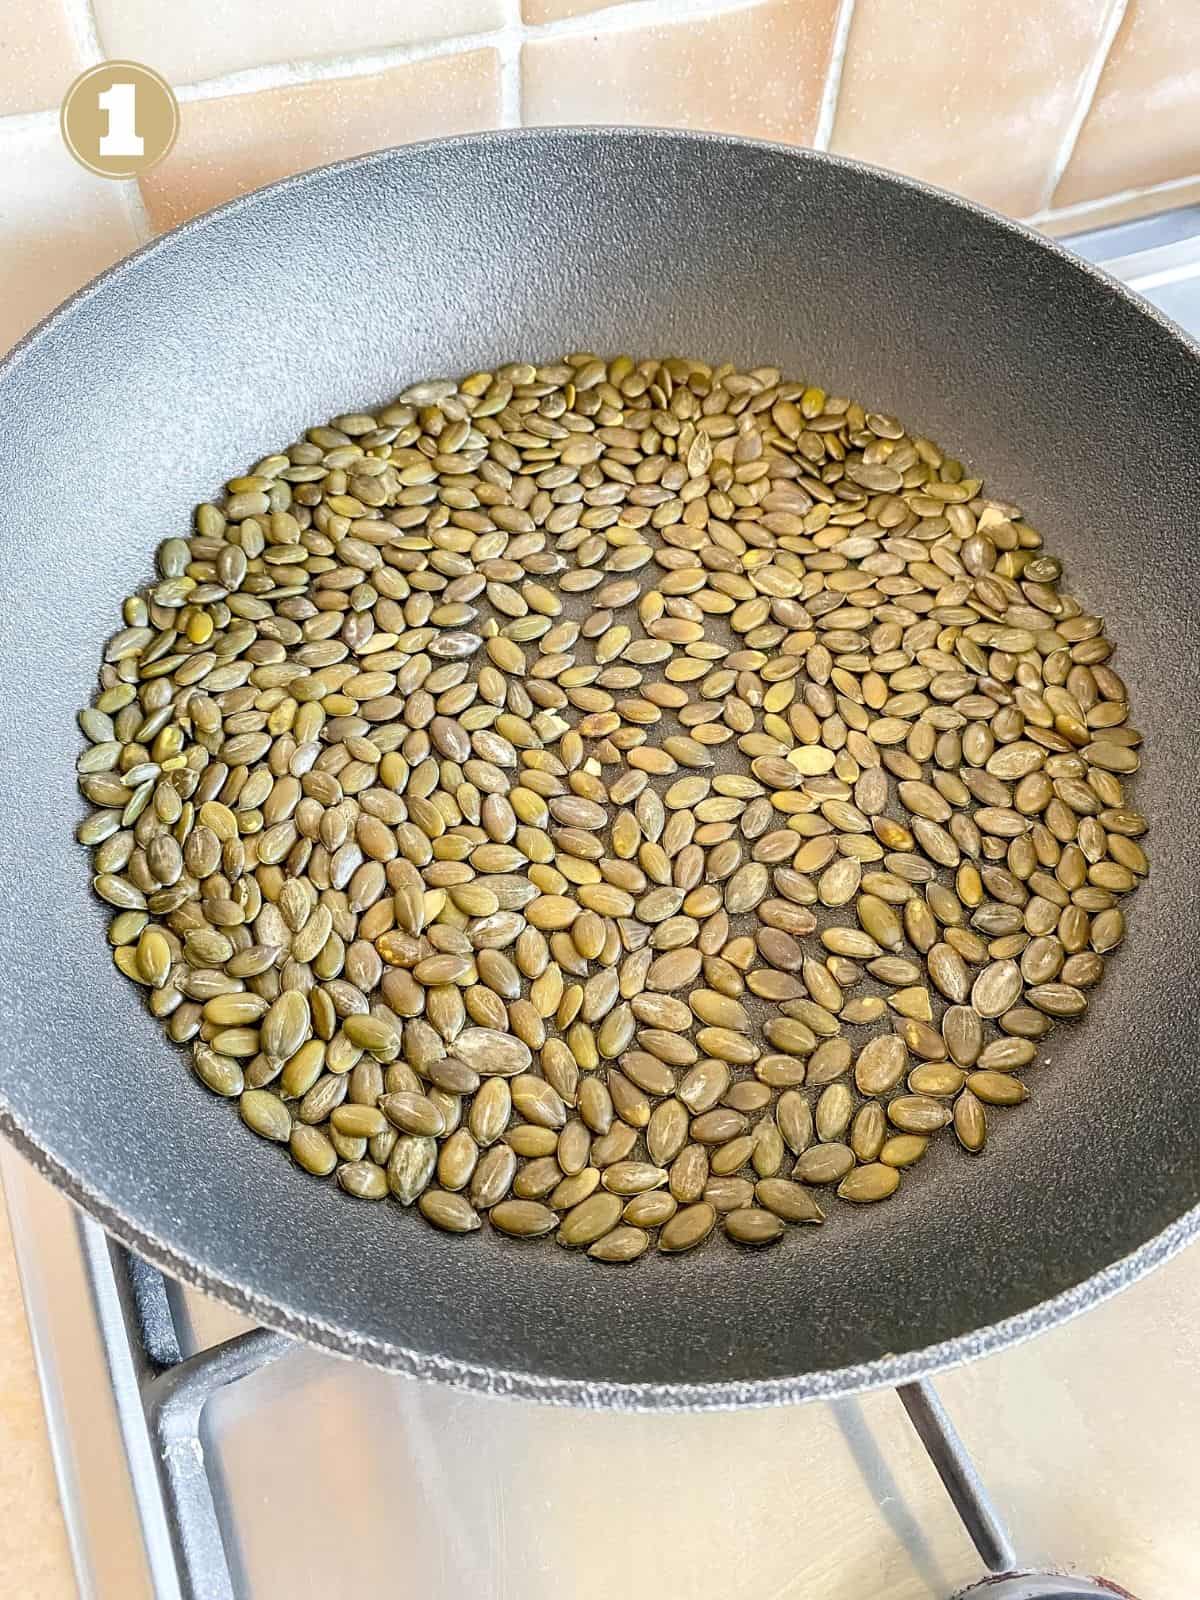 pumpkin seeds in a frying pan.